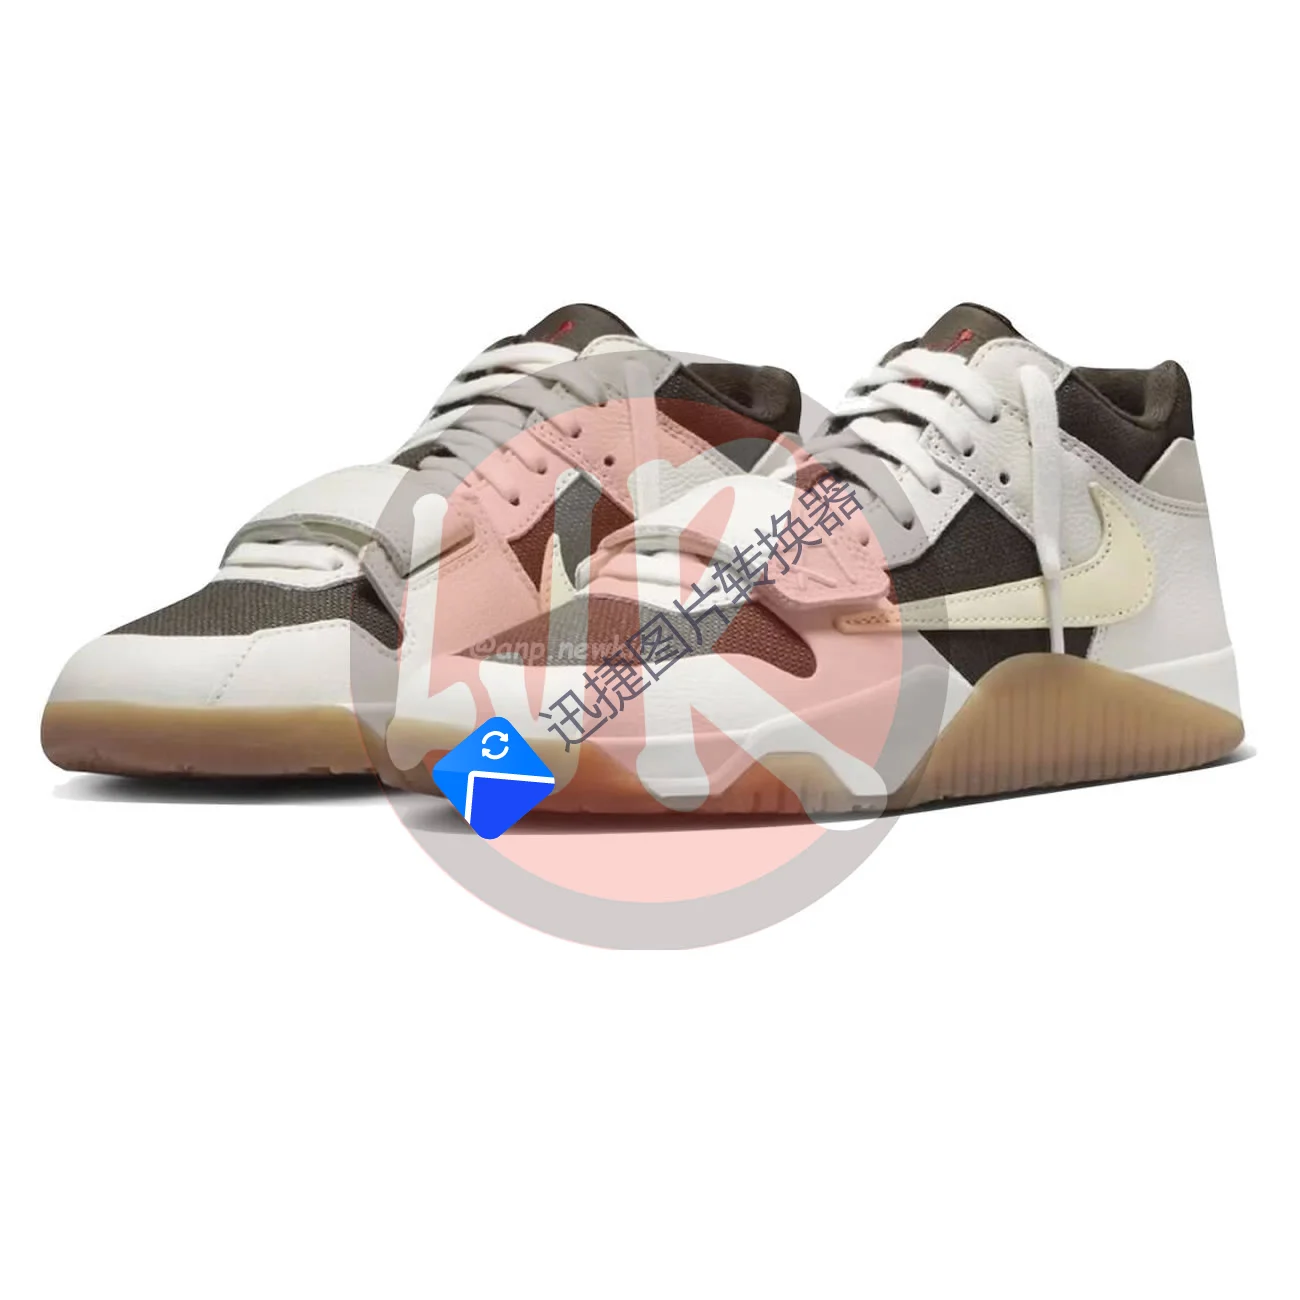 Travis Scott X Jordan Cut The Check Trainer Release Date Ljr Sneakers (22) - bc-ljr.net